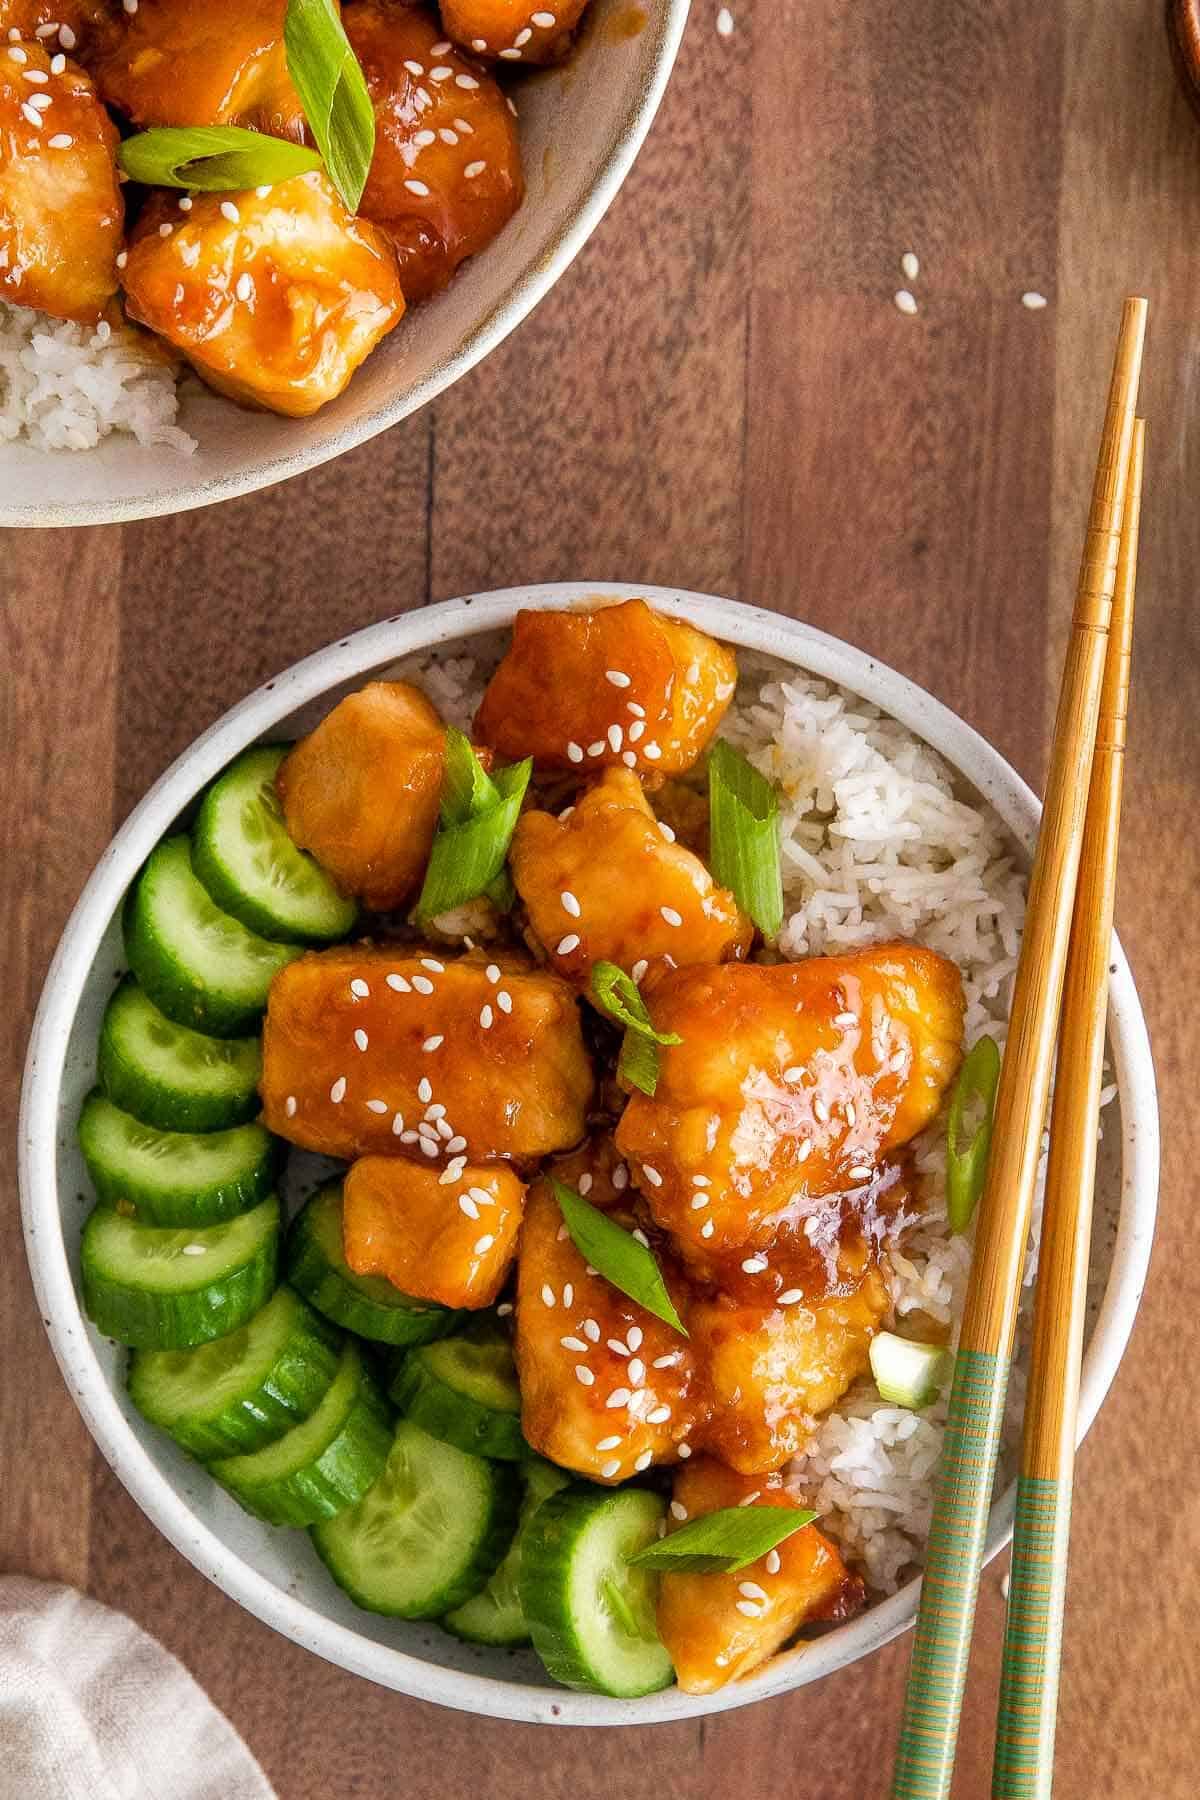 Honey garlic soy chicken bites with rice and chopsticks